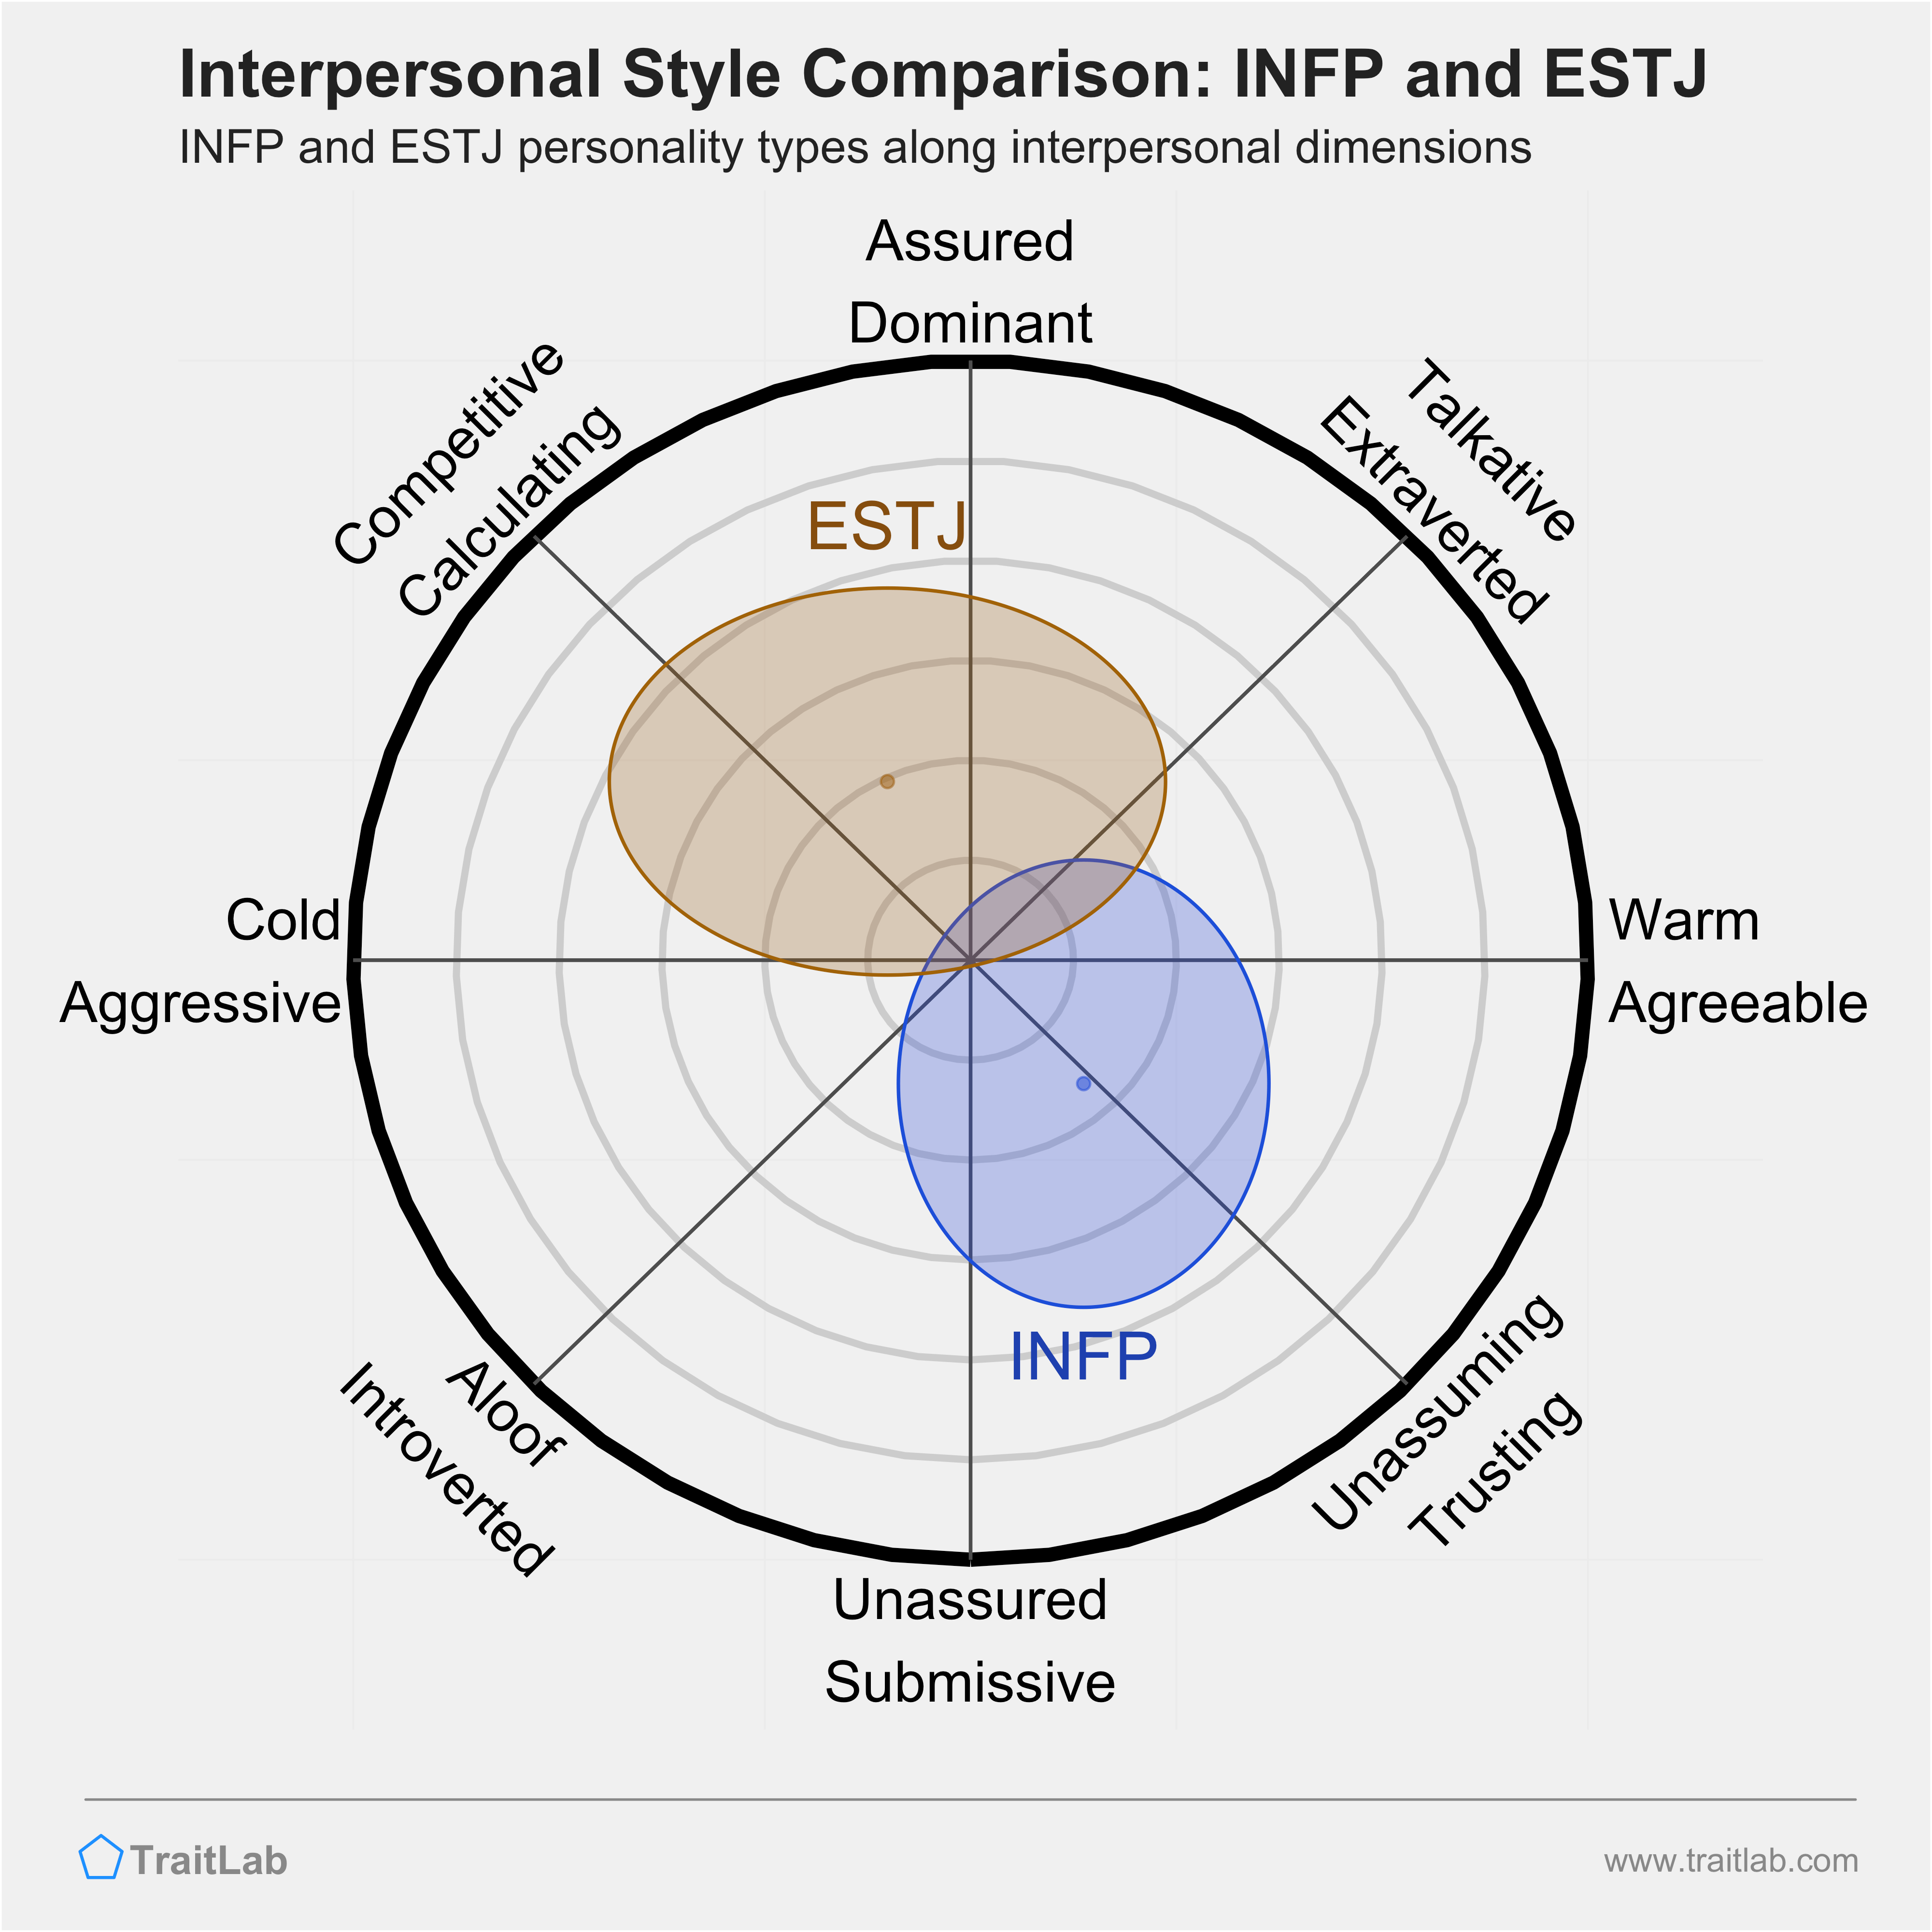 INFP and ESTJ comparison across interpersonal dimensions